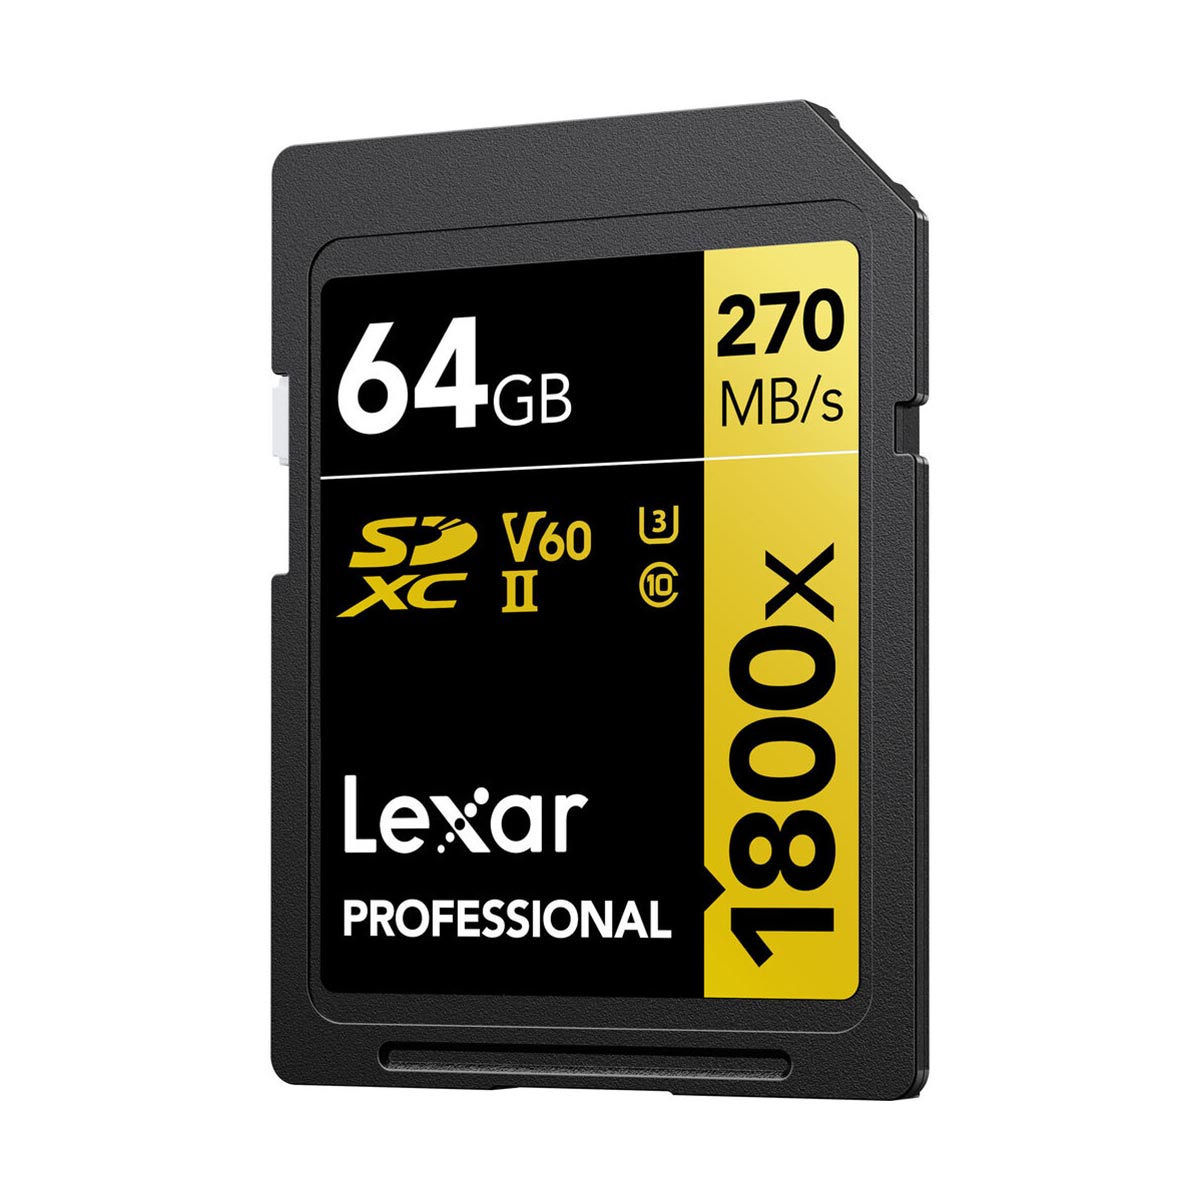 Lexar 64GB Professional 1800x UHS-II SDXC (V60) Memory Card